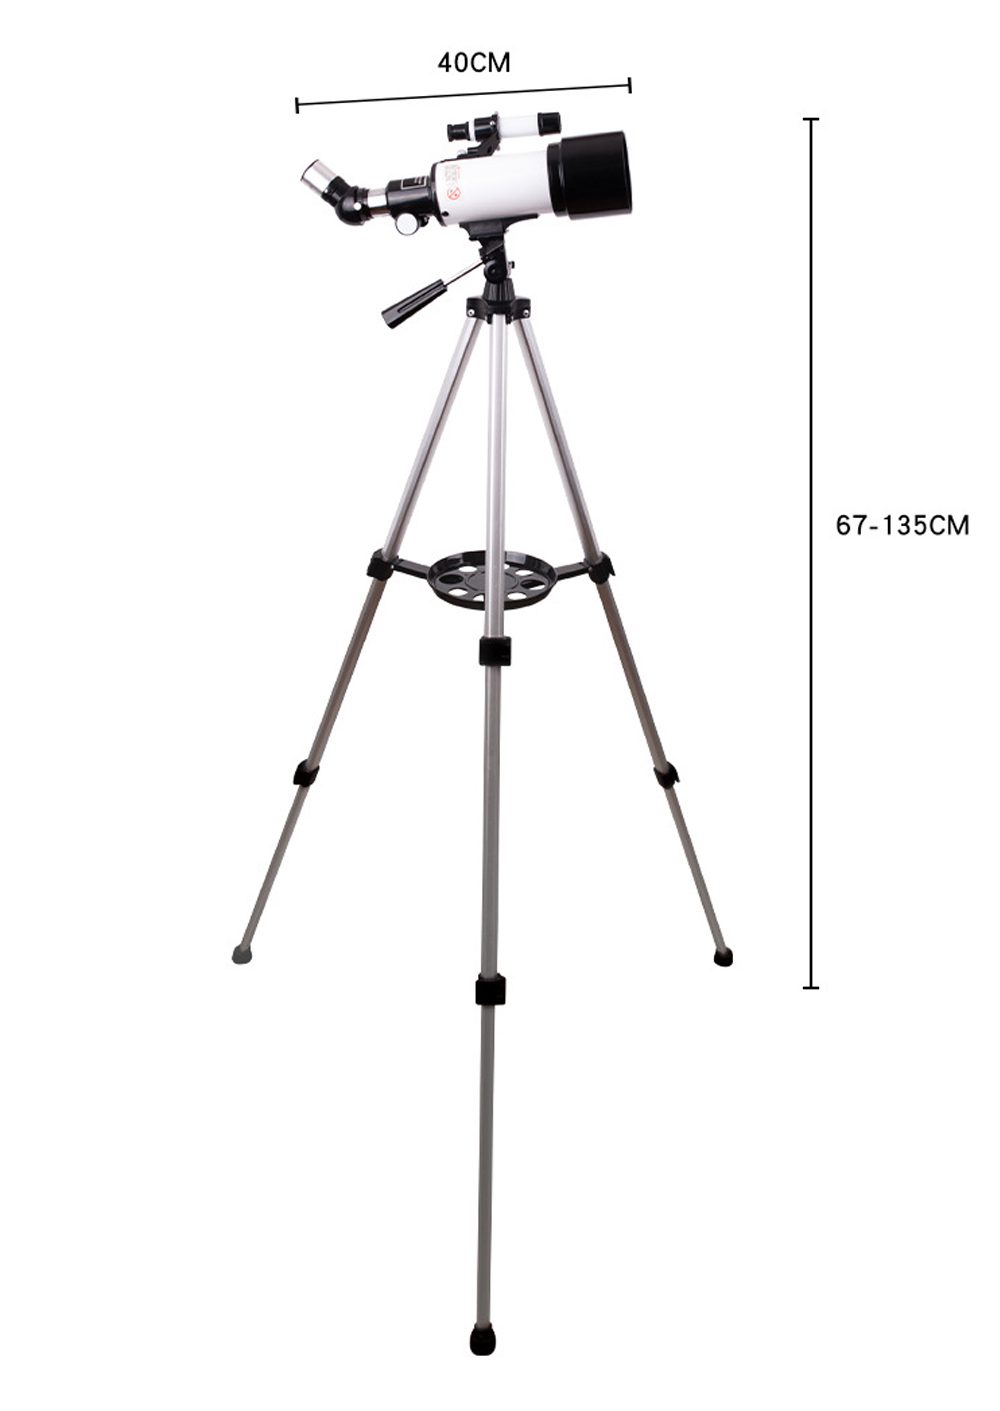 LUXUN-40070-Professional-Astronomical-Telescope-FMC-Lens-Coating-3X-Magnification-Monocular-Telescop-1844691-2